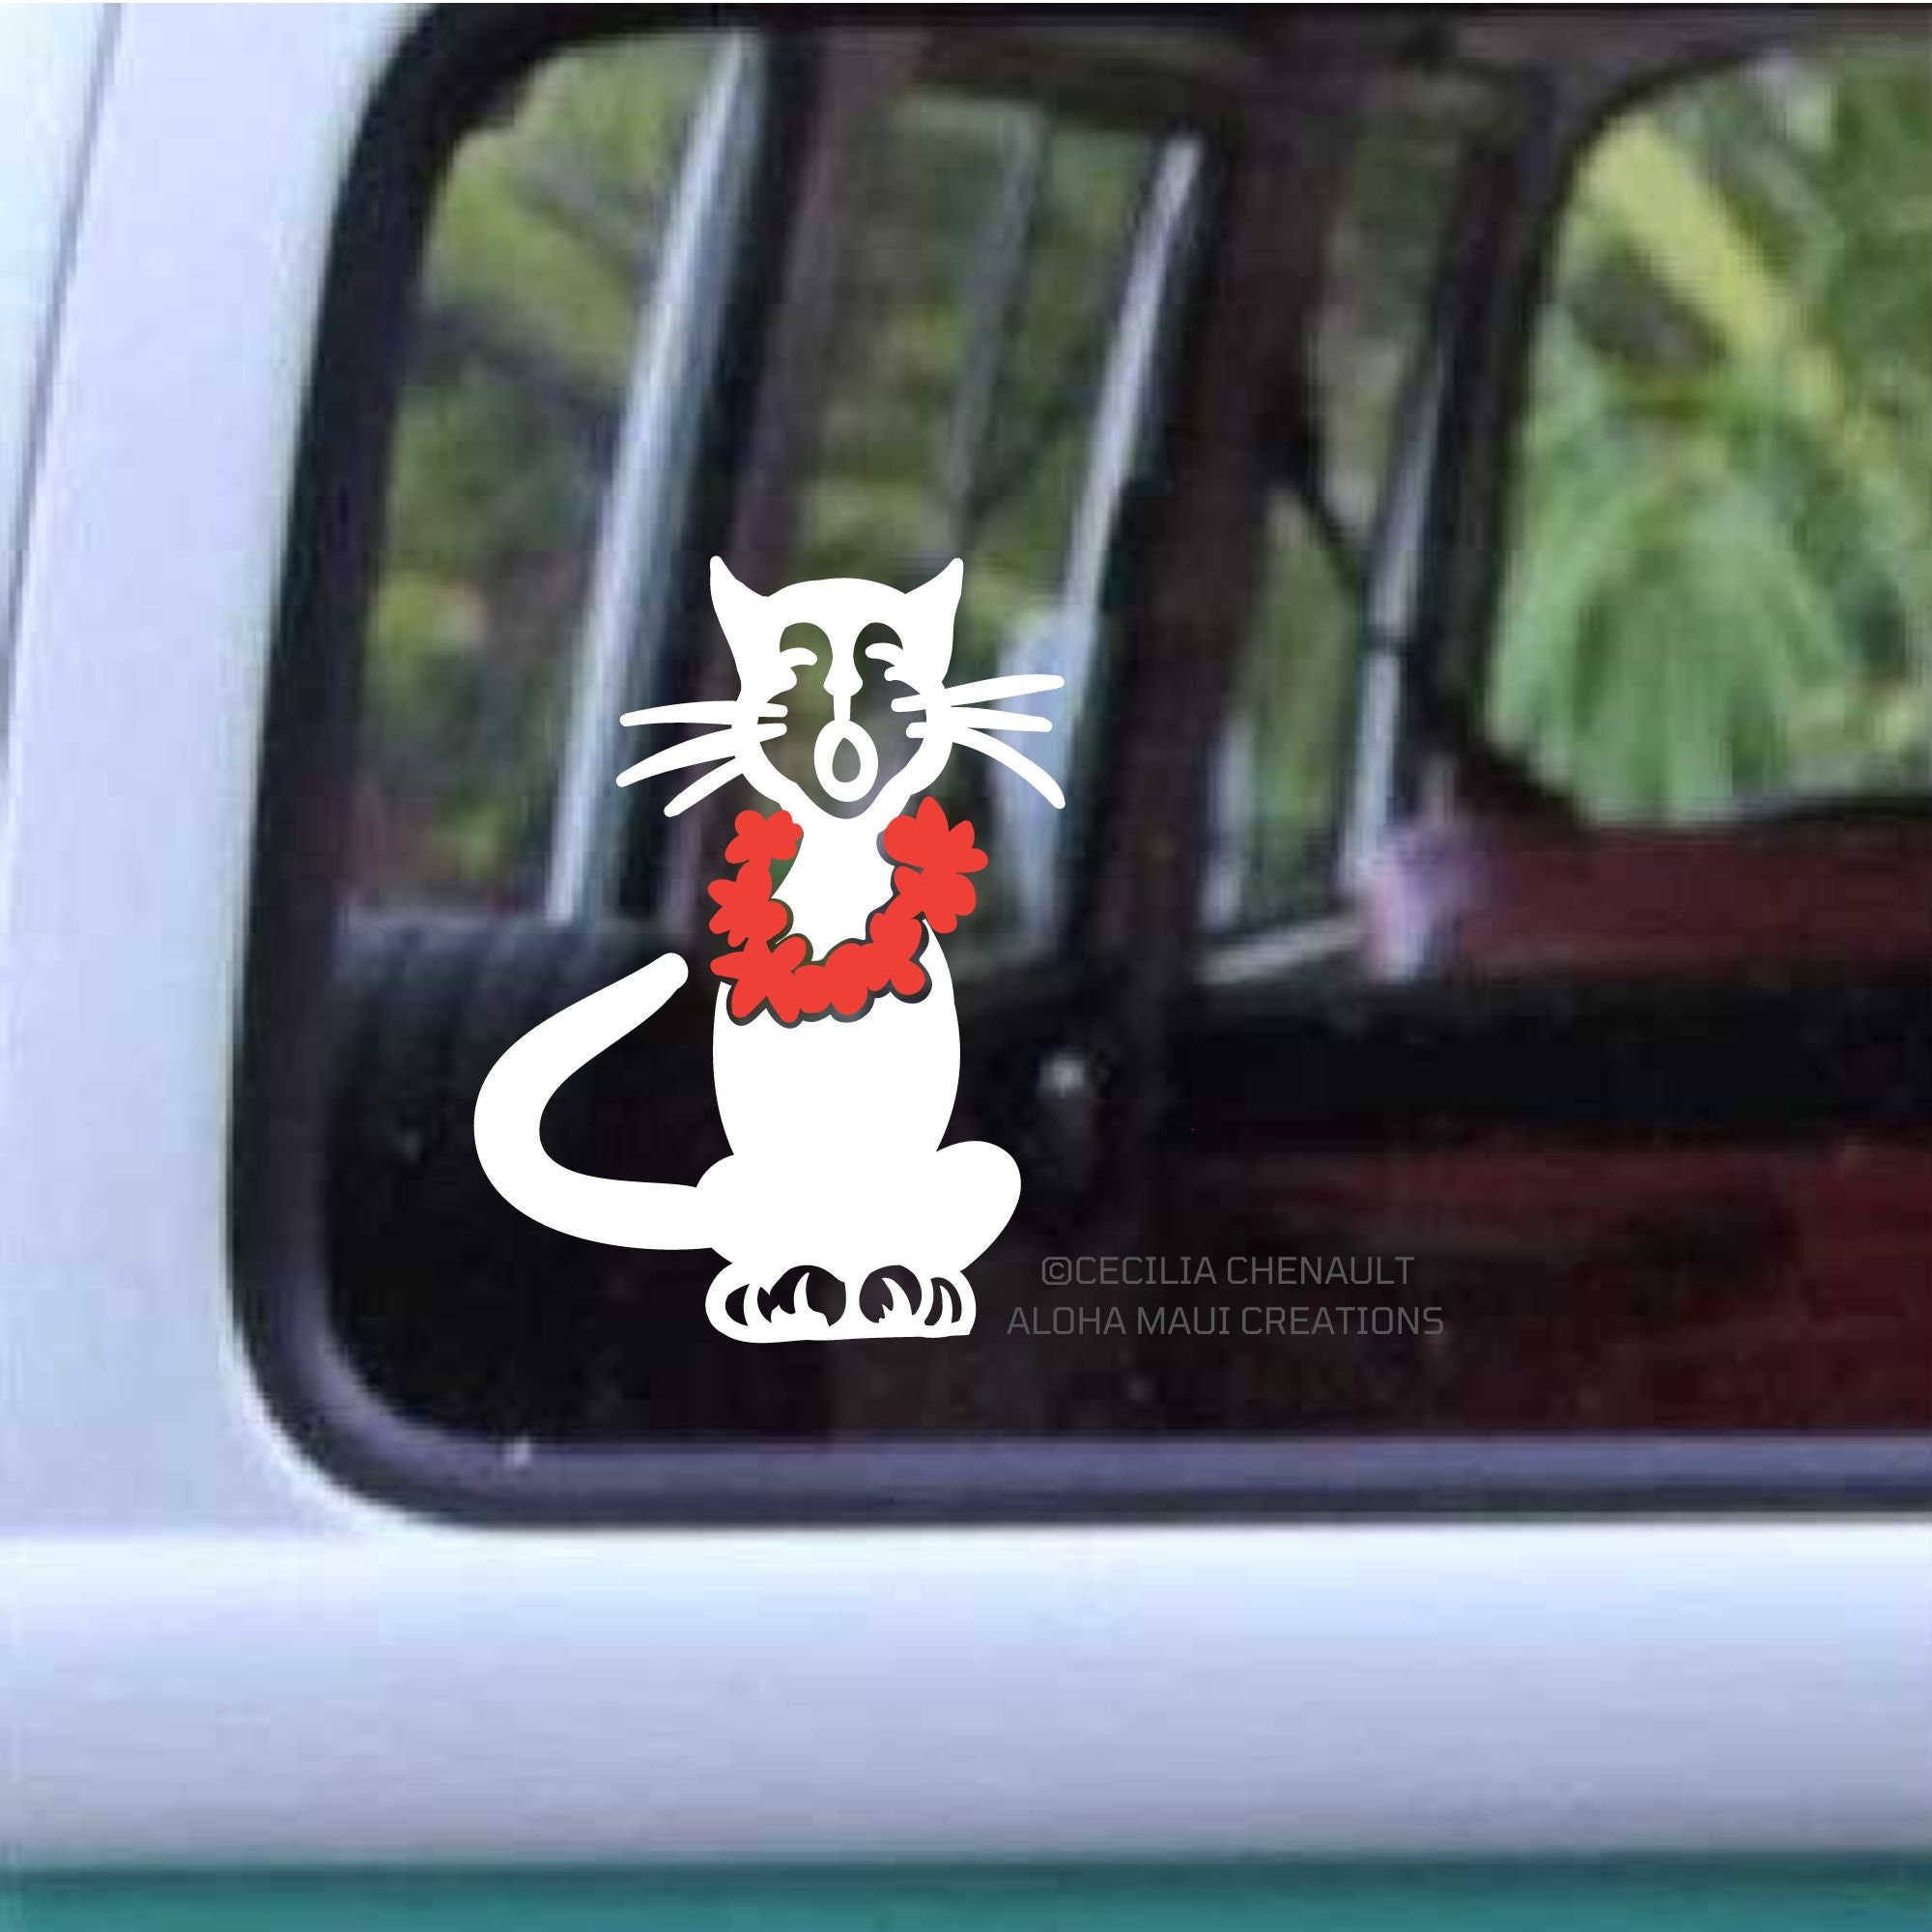 Calico Cat Sticker - Sticker Graphic - Auto, Wall, Laptop, Cell, Truck  Sticker for Windows, Cars, Trucks